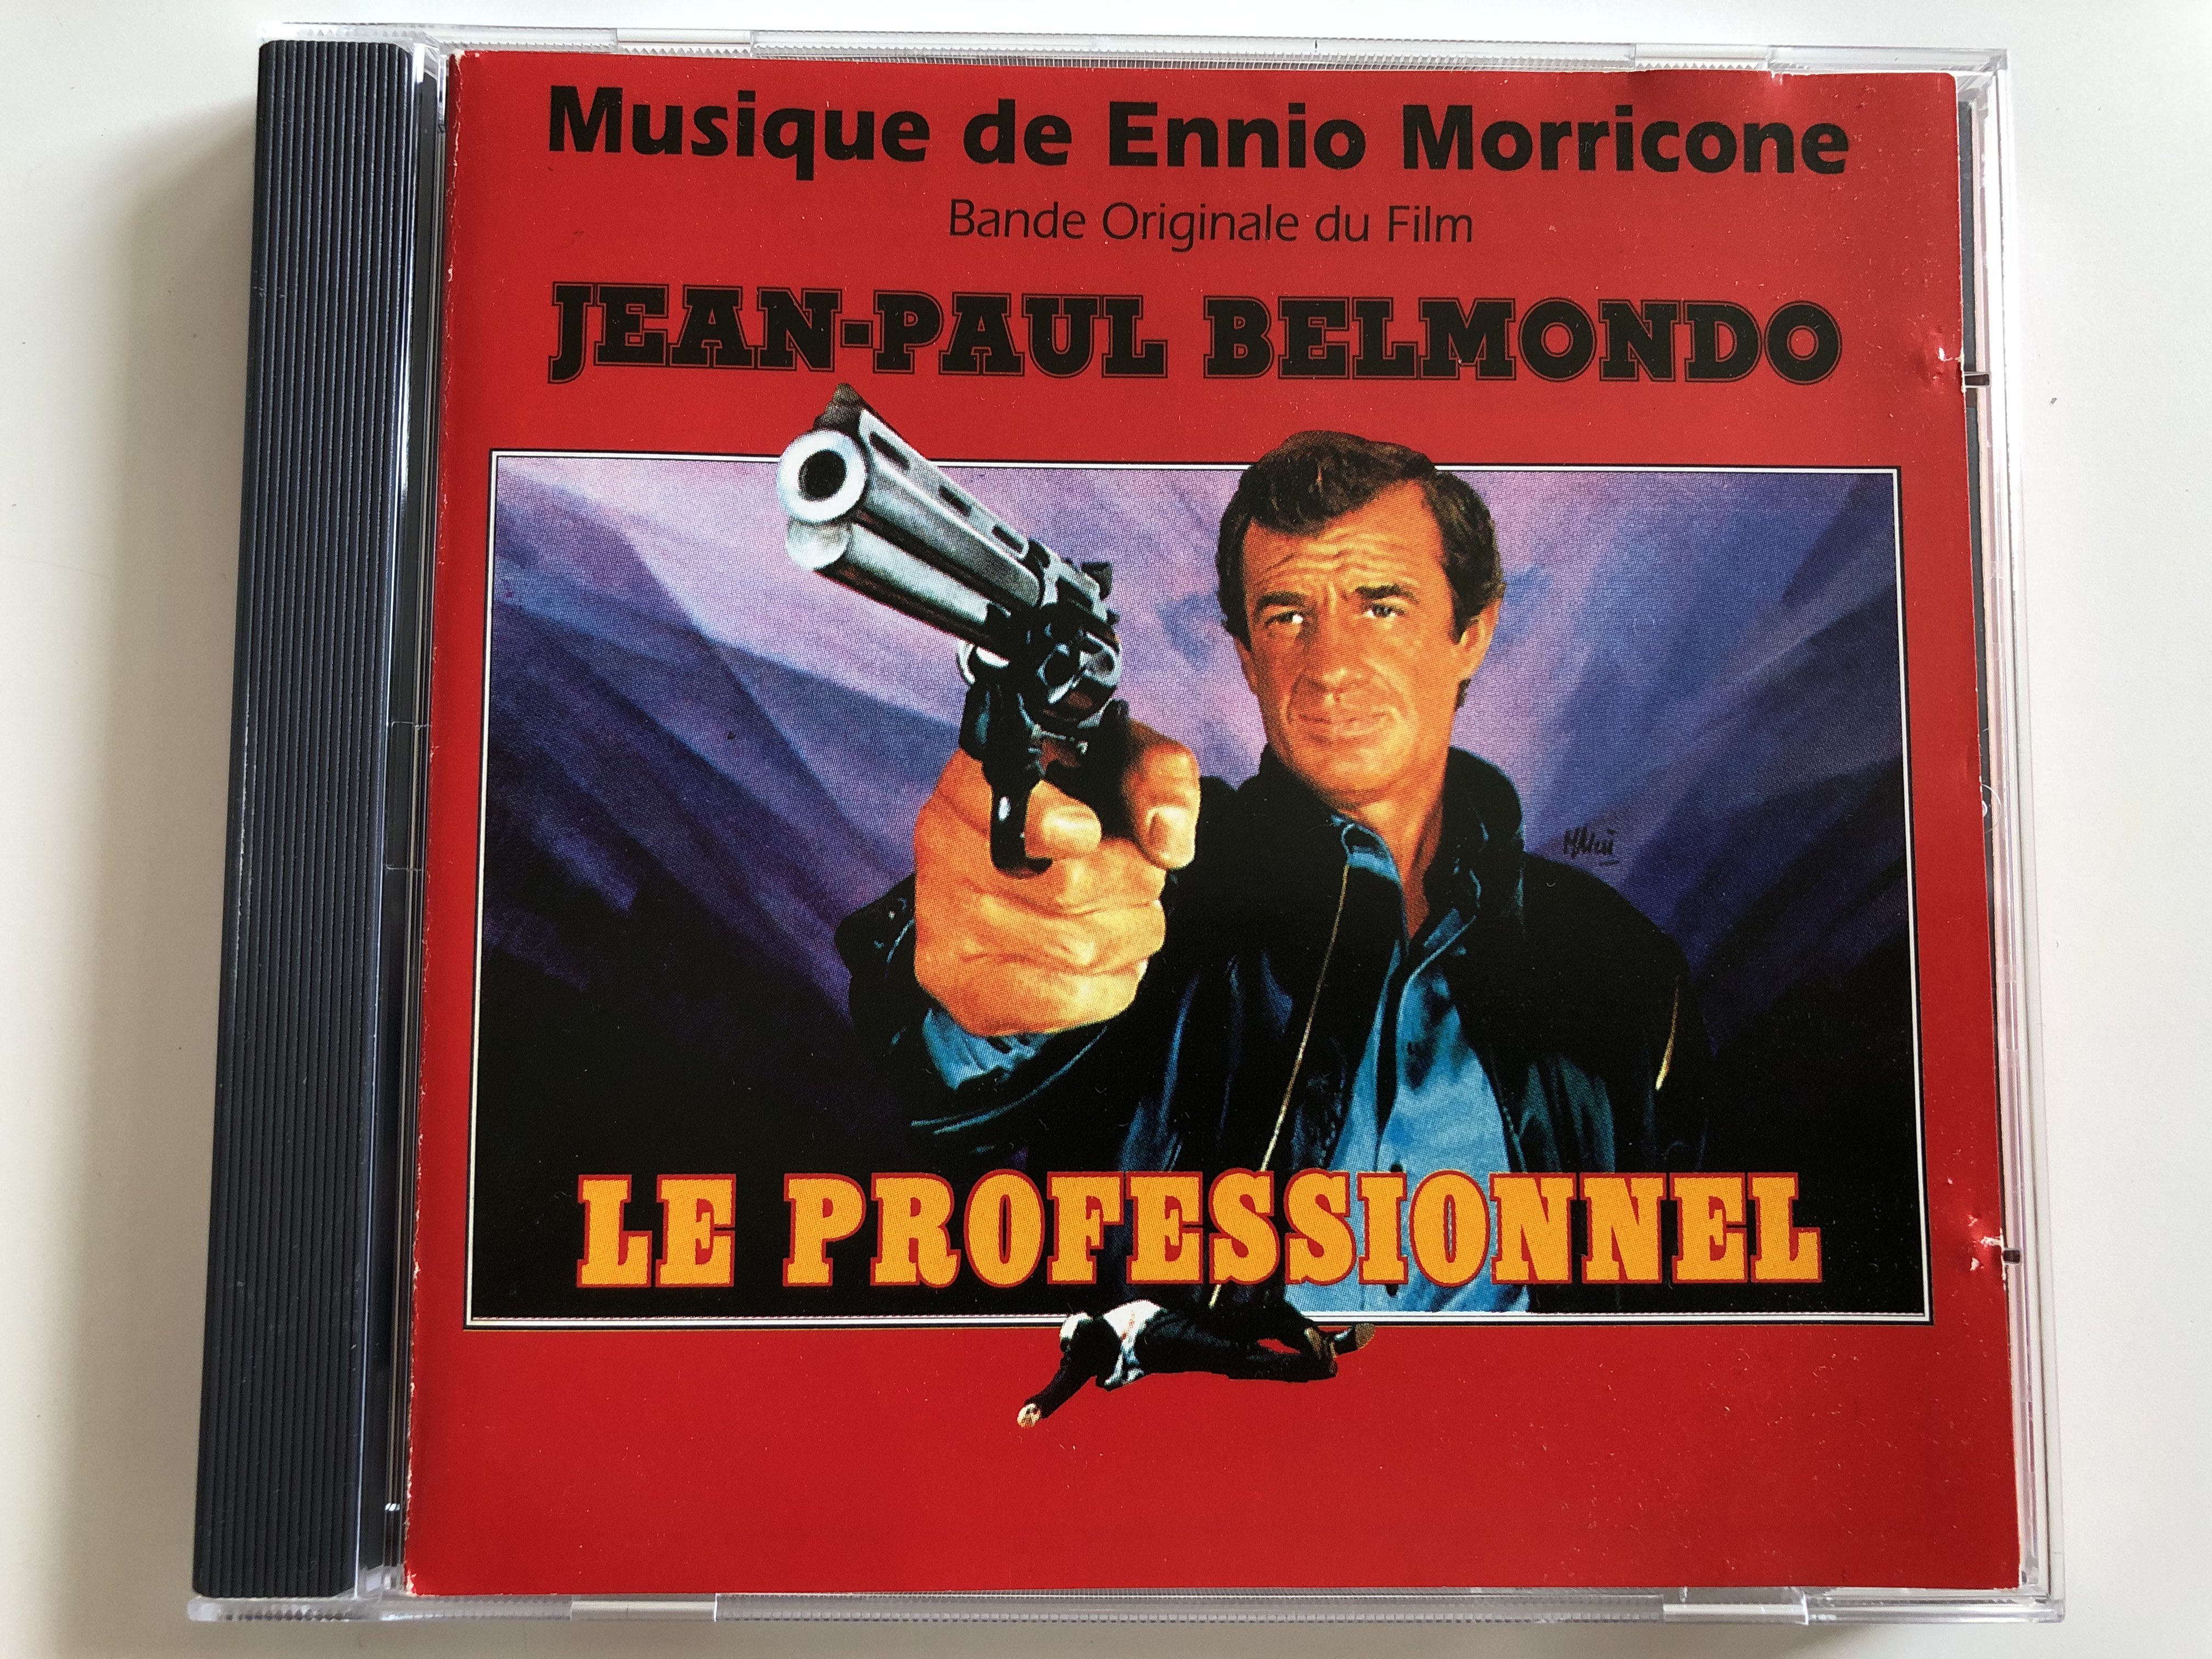 musique-de-ennio-morricone-bande-originale-du-film-jean-paul-belmondo-le-professionnel-e.-z.-s.-music-audio-cd-1997-97042-e.-z.-s-1-.jpg